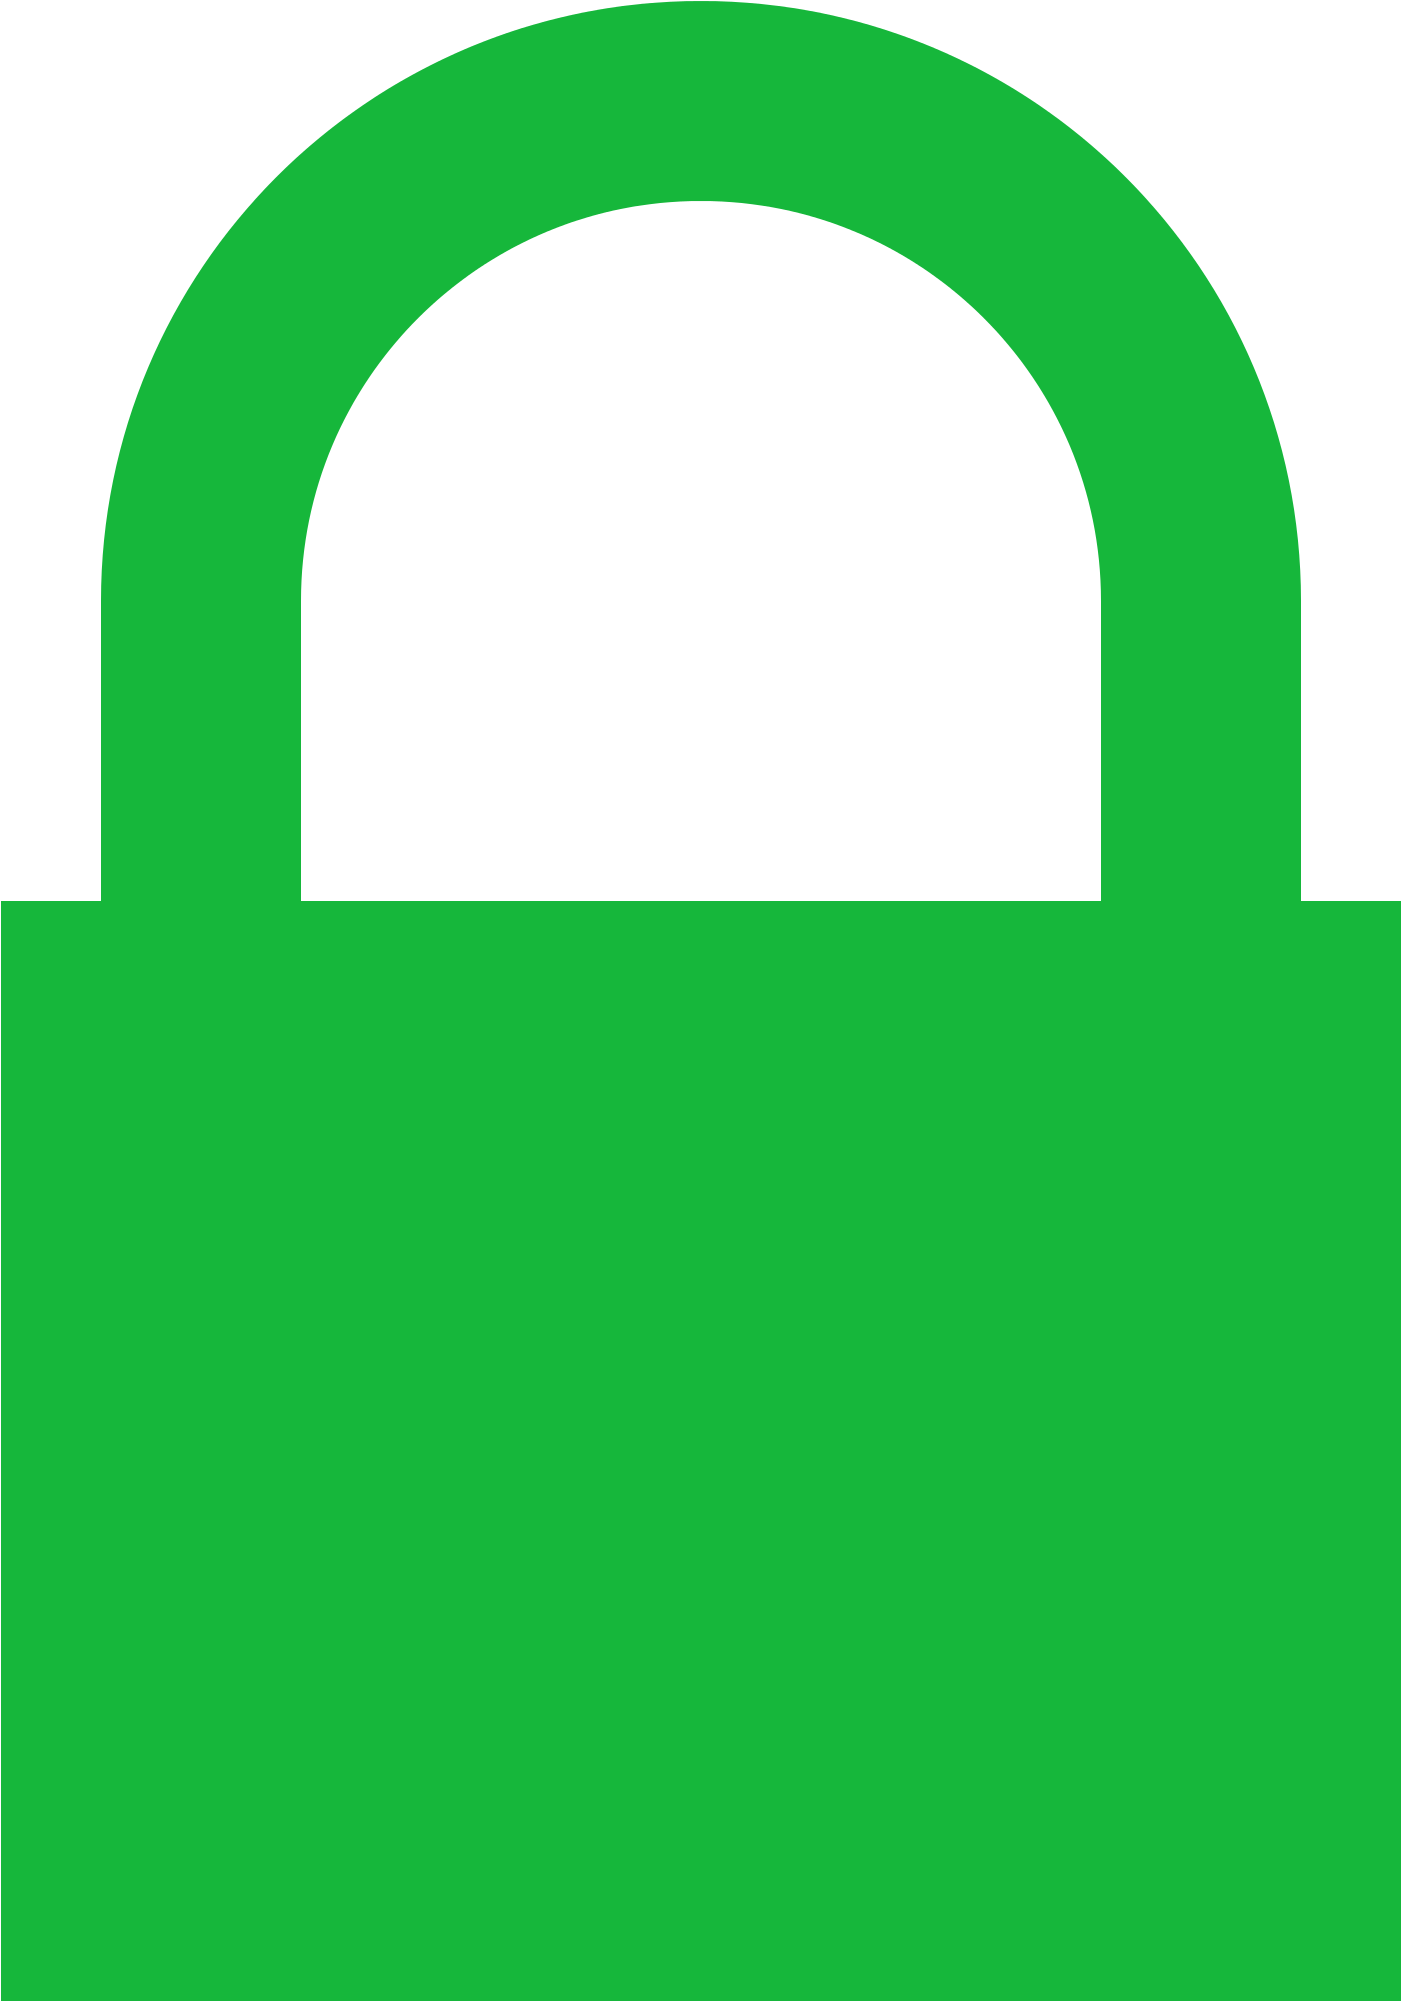 Open - Green Padlock Icon Ssl (2000x2000)